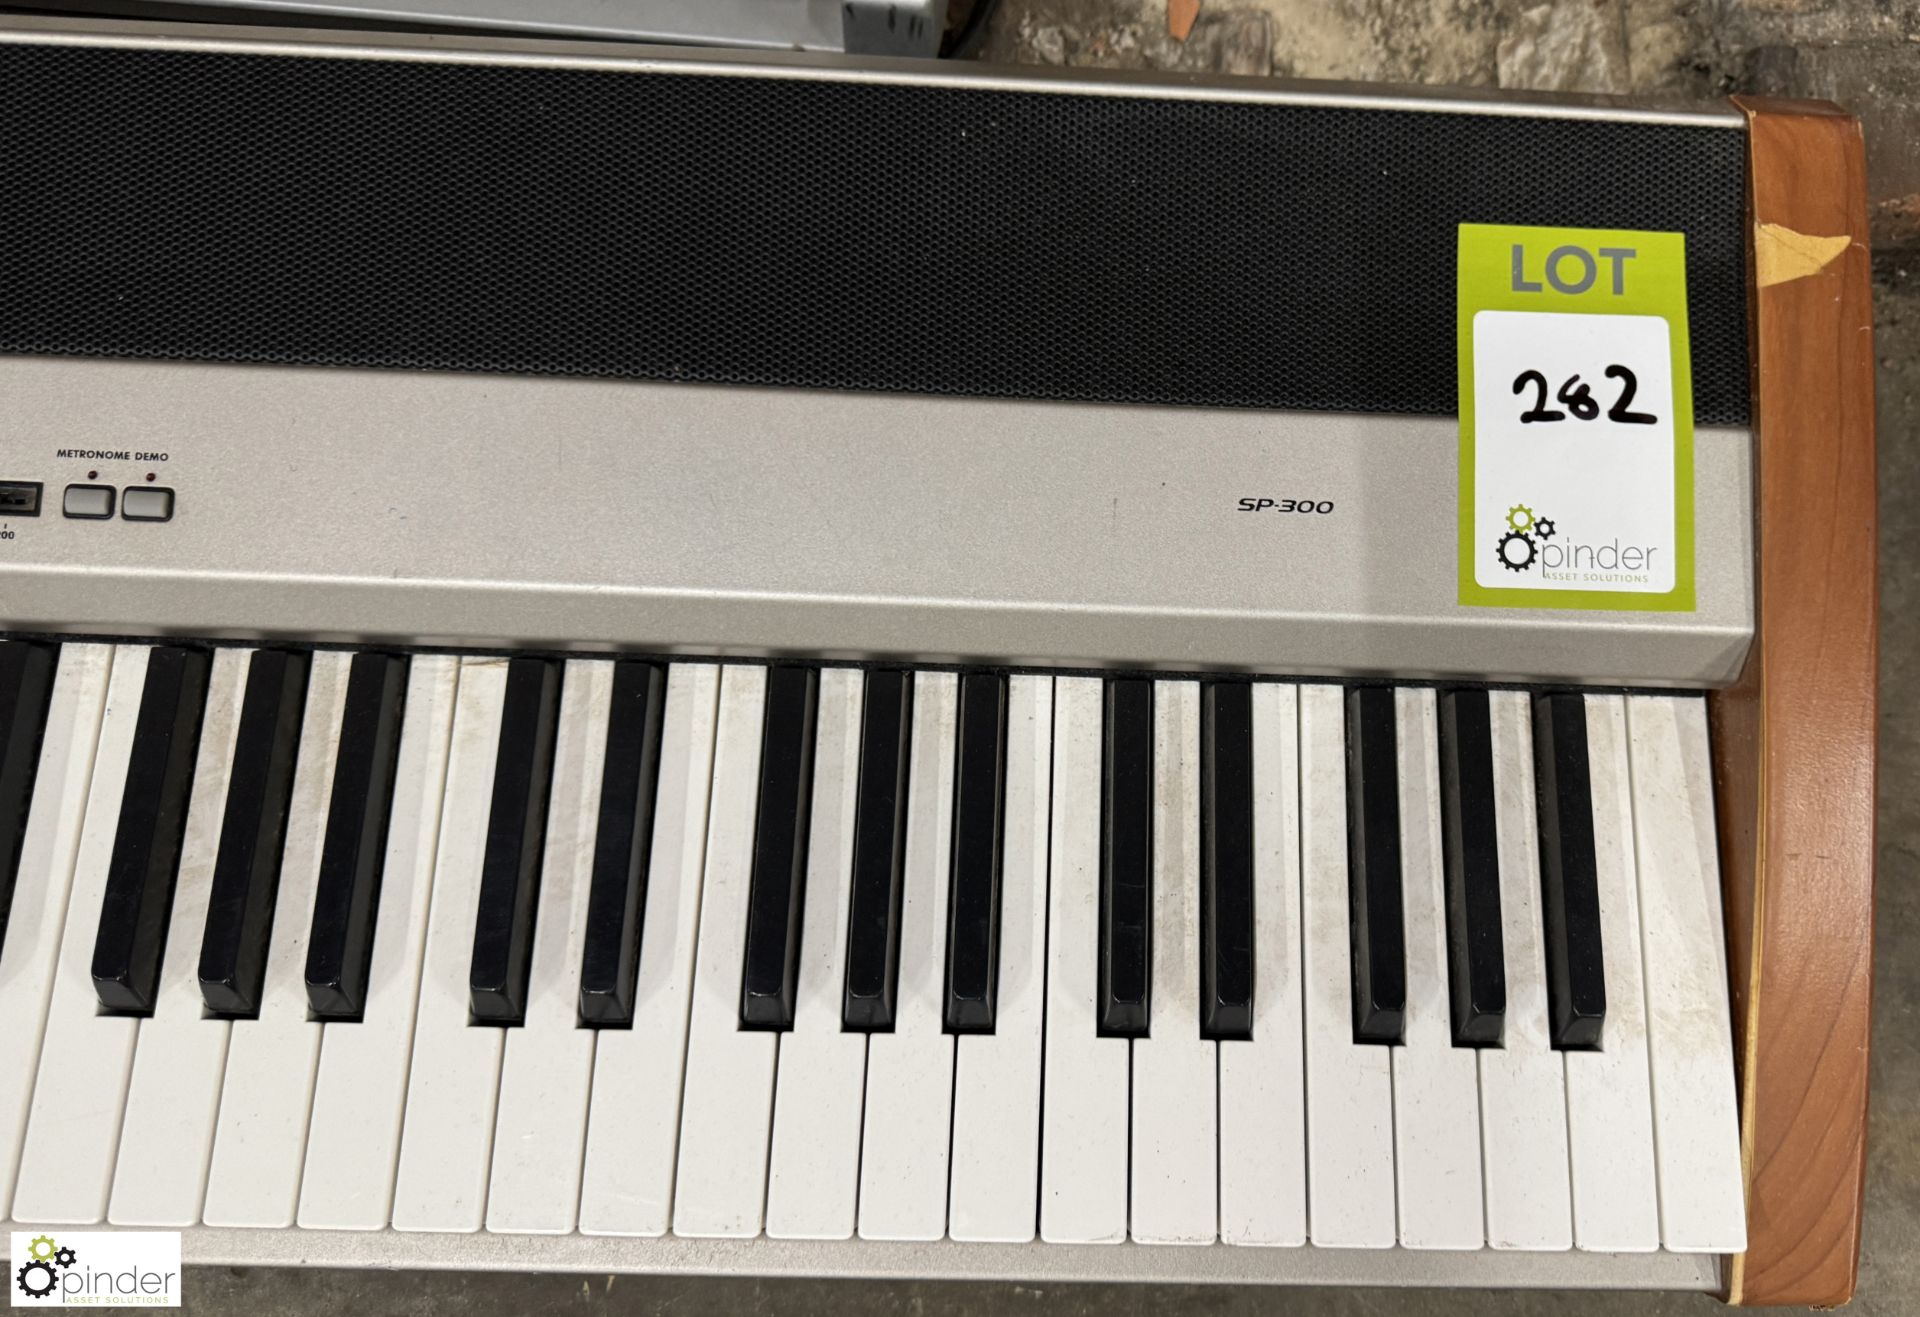 Korg SP-300 Digital Piano - Image 2 of 4